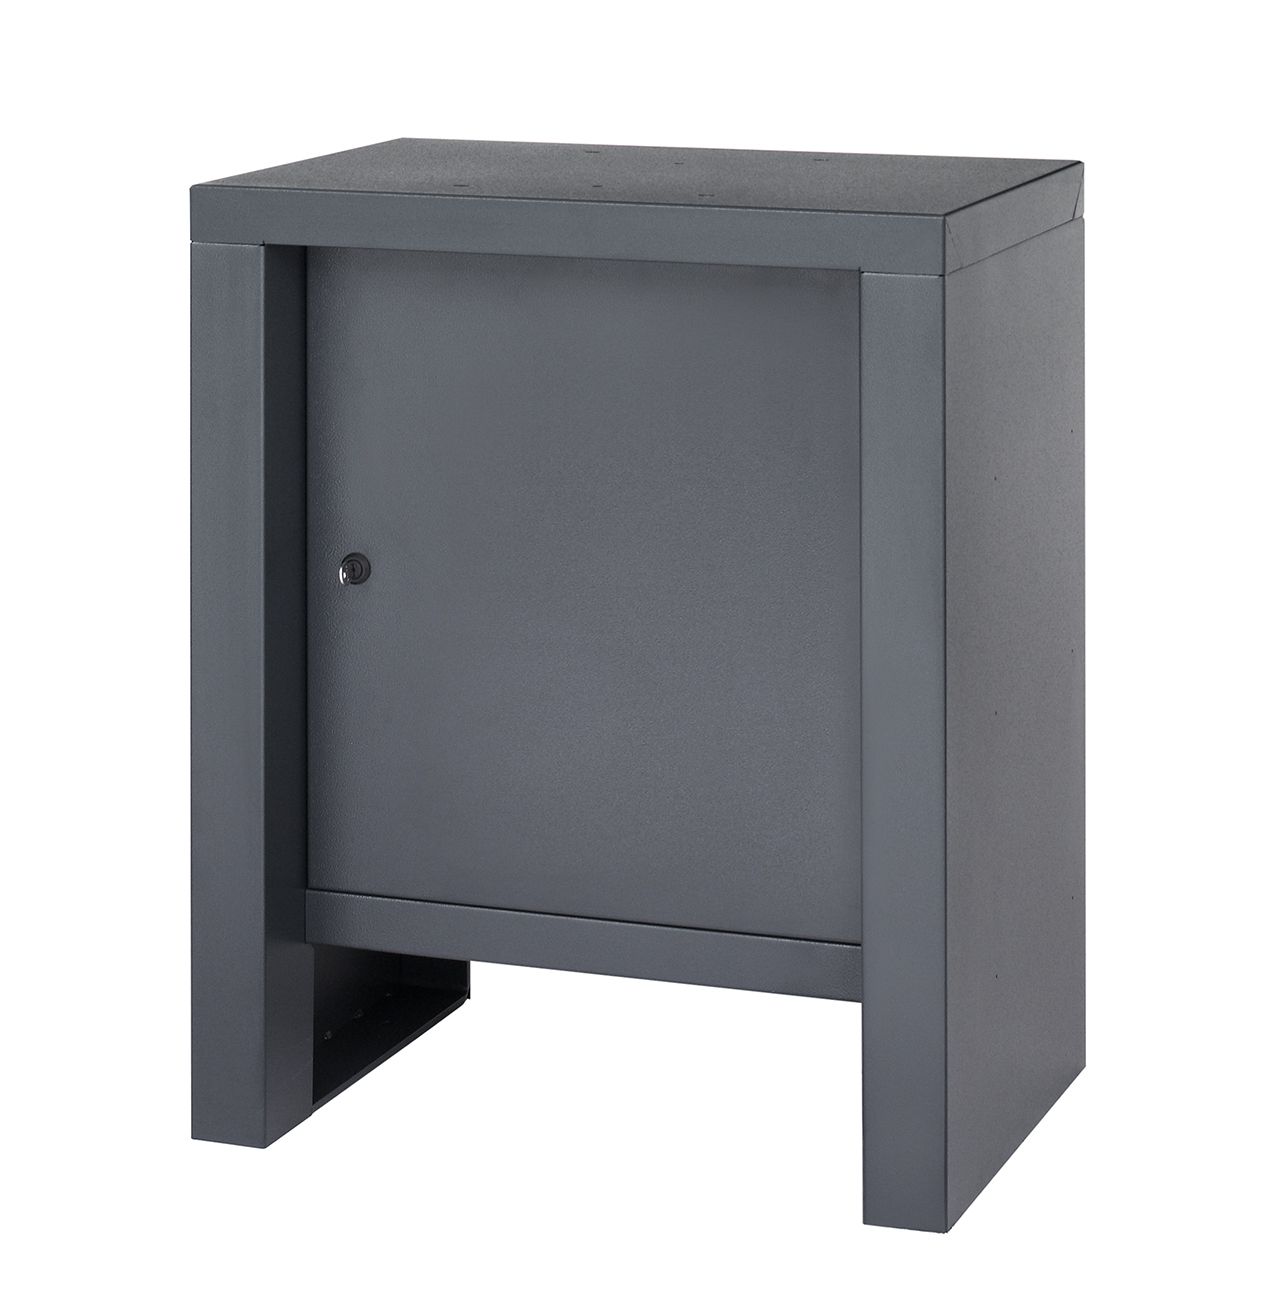 Machine base cabinet W700 x D445 x H850 mm